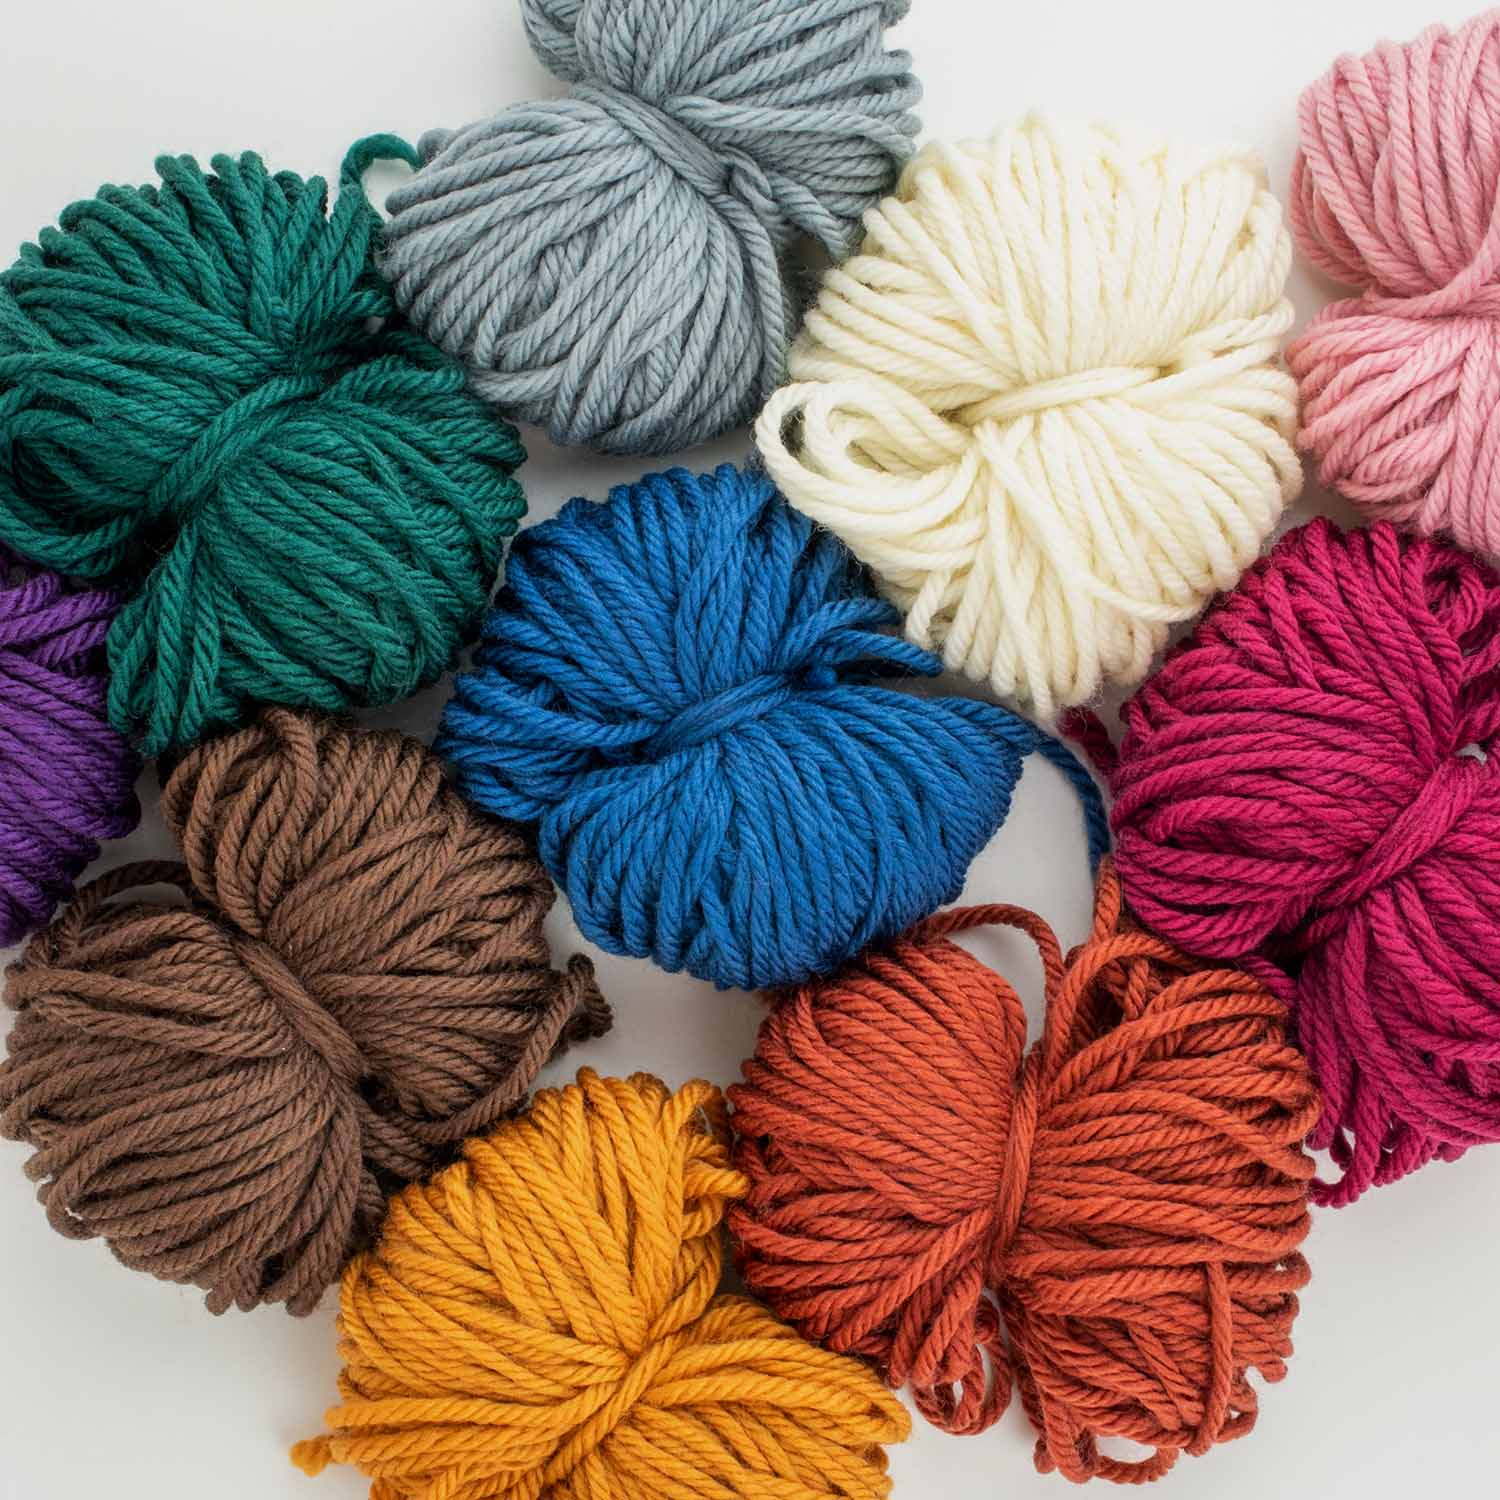 Learn to Knit Kit  Beginner Beanie COD028 – Crumbz Craft